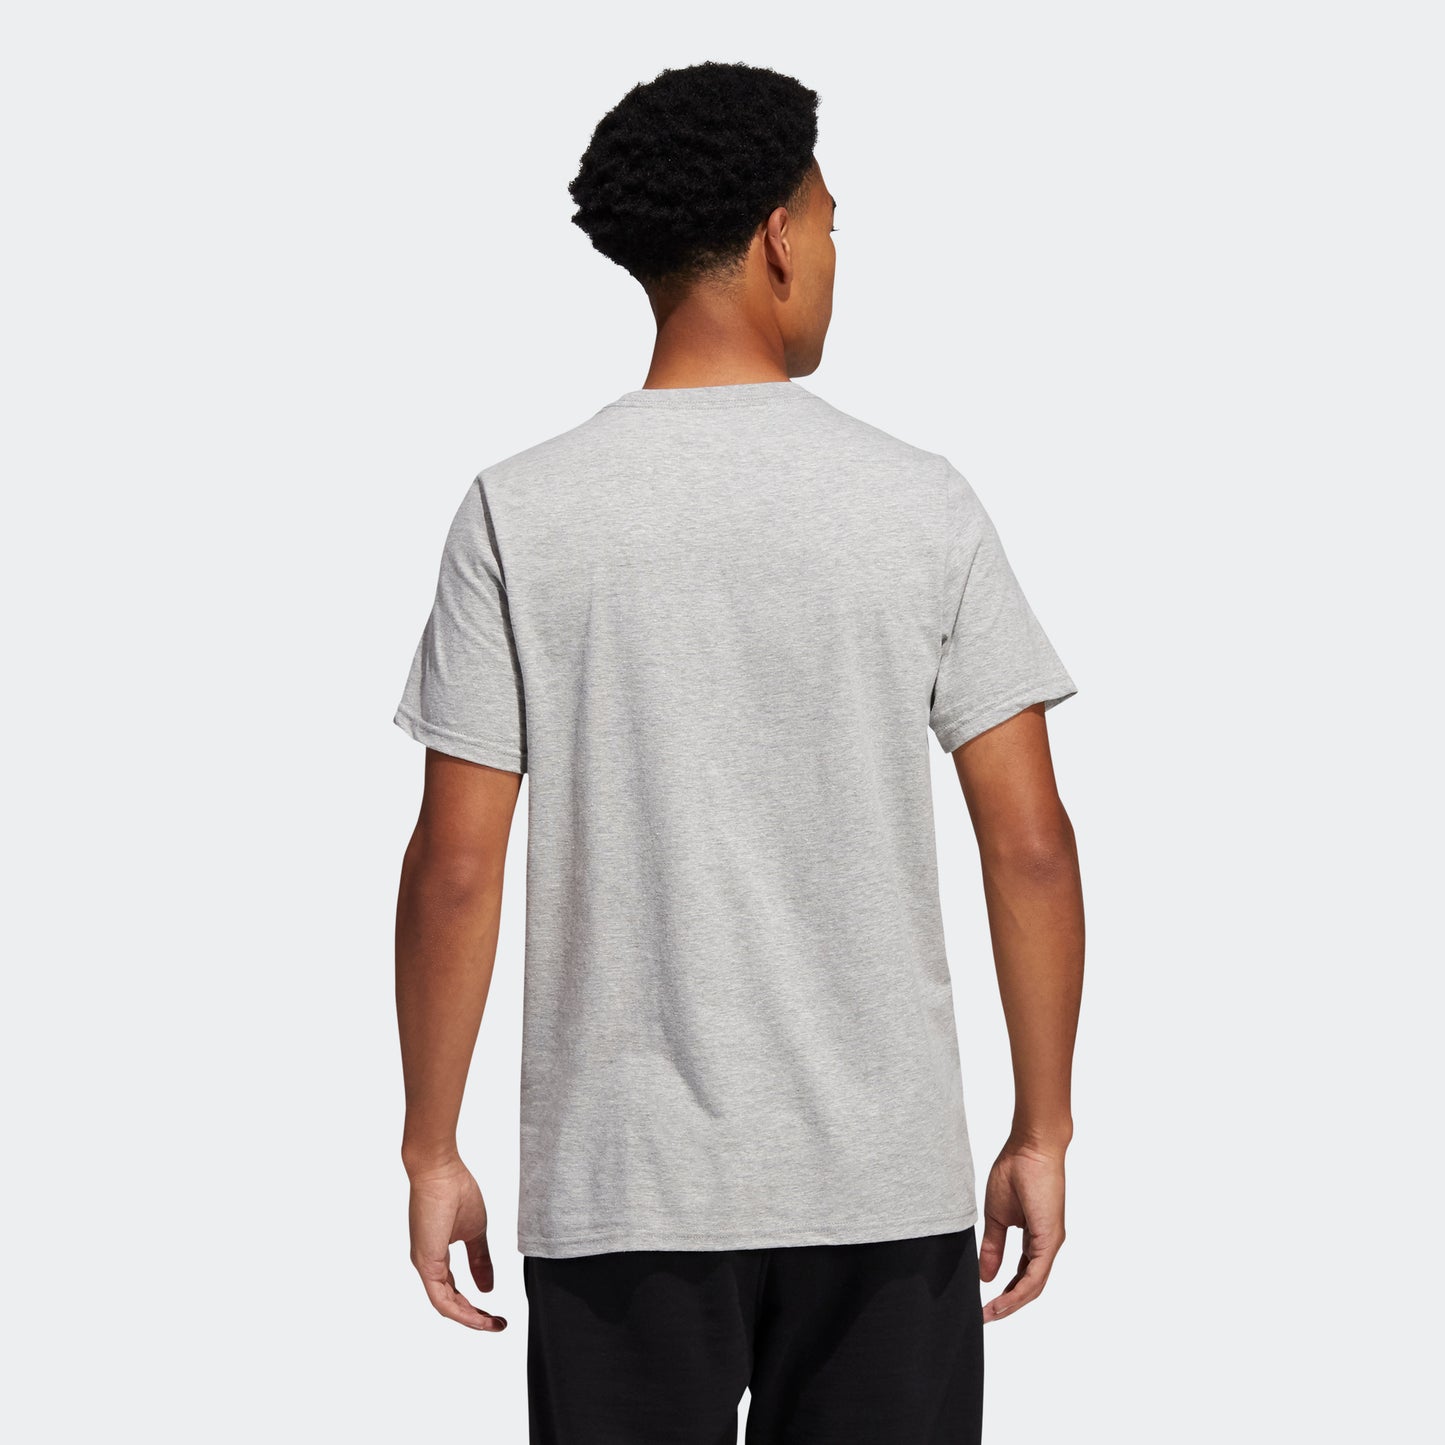 adidas AMPLIFIER T-Shirt | Medium Grey Heather | Men's